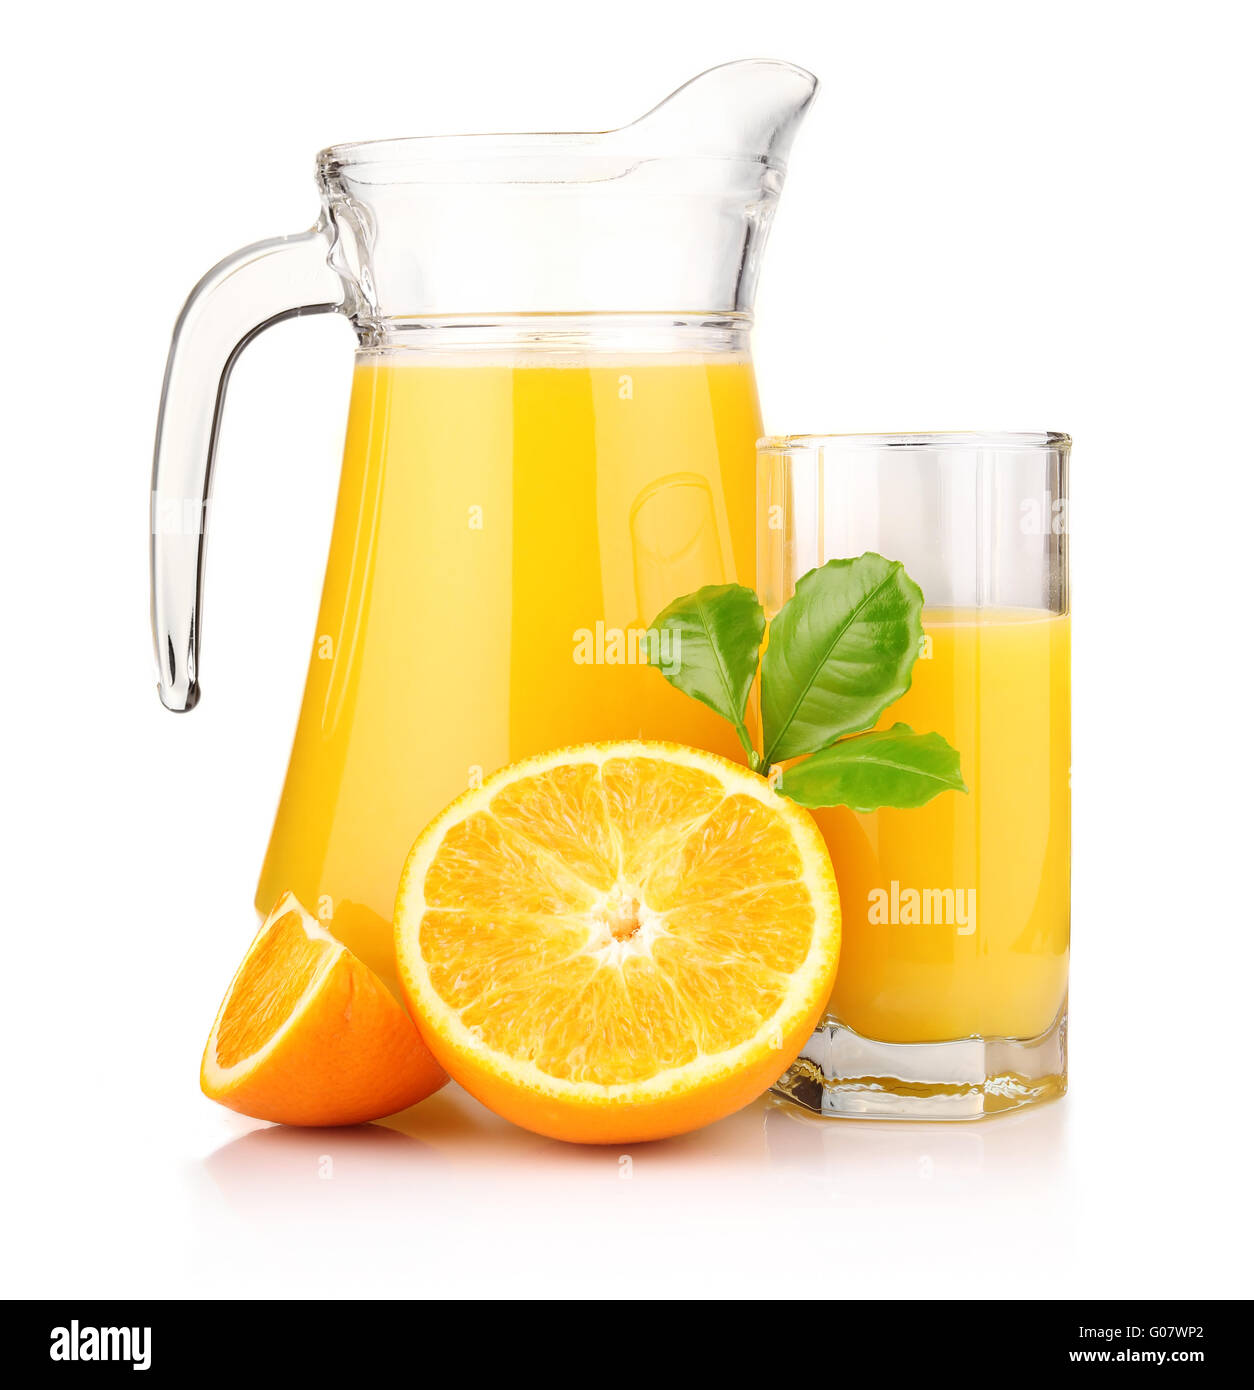 https://c8.alamy.com/comp/G07WP2/jug-glass-of-orange-juice-and-orange-fruits-with-green-leaves-isolated-G07WP2.jpg